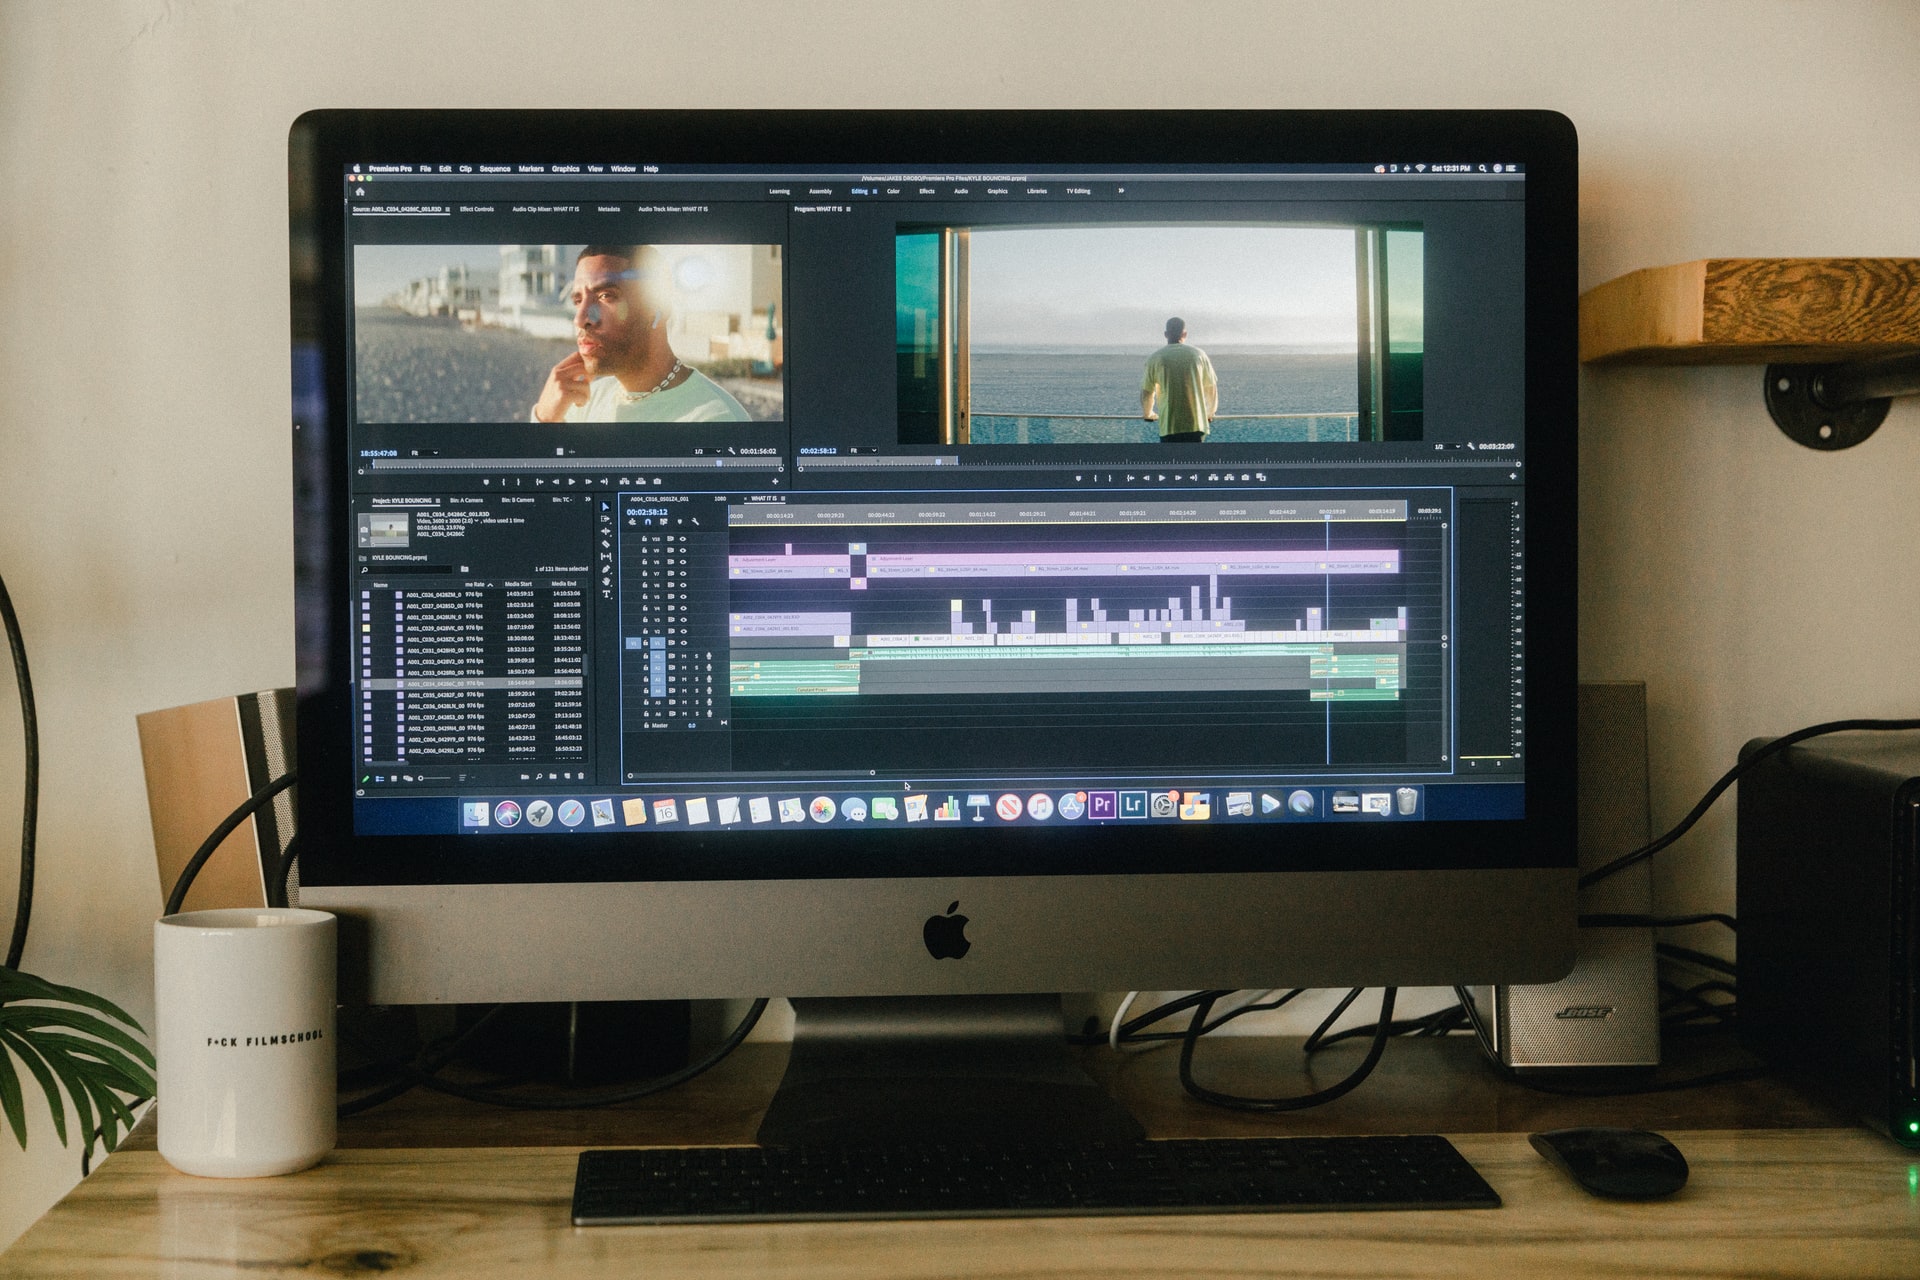 Video editor open on Mac